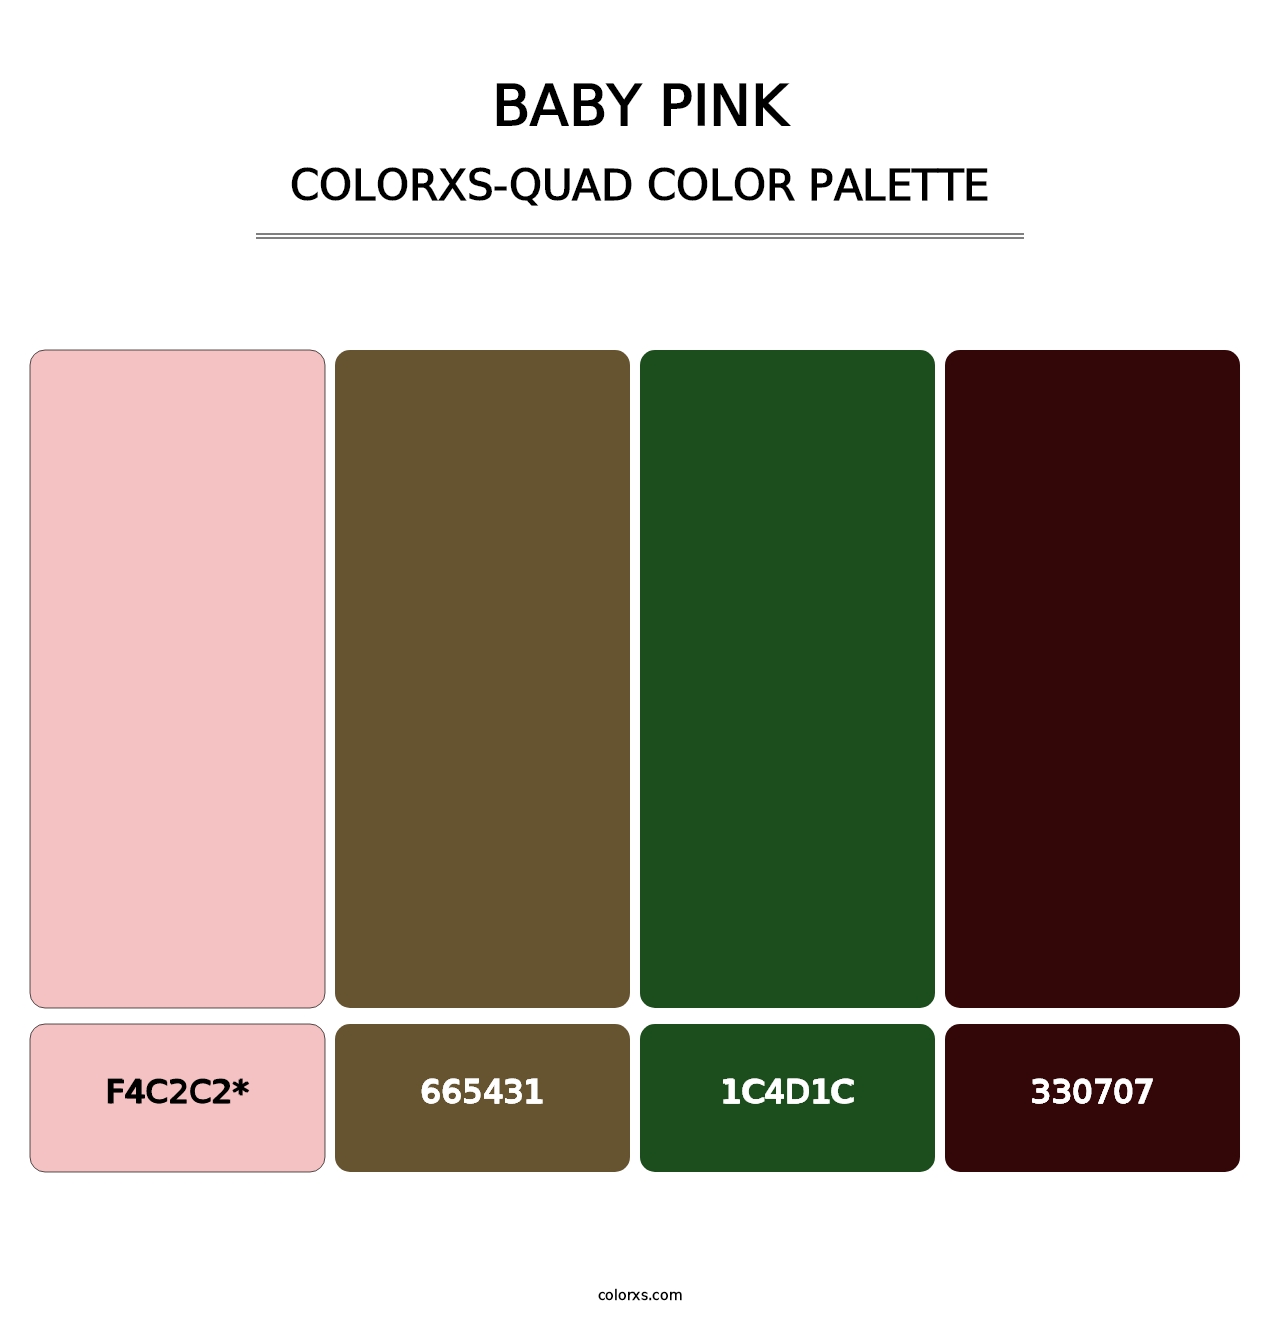 Baby Pink - Colorxs Quad Palette